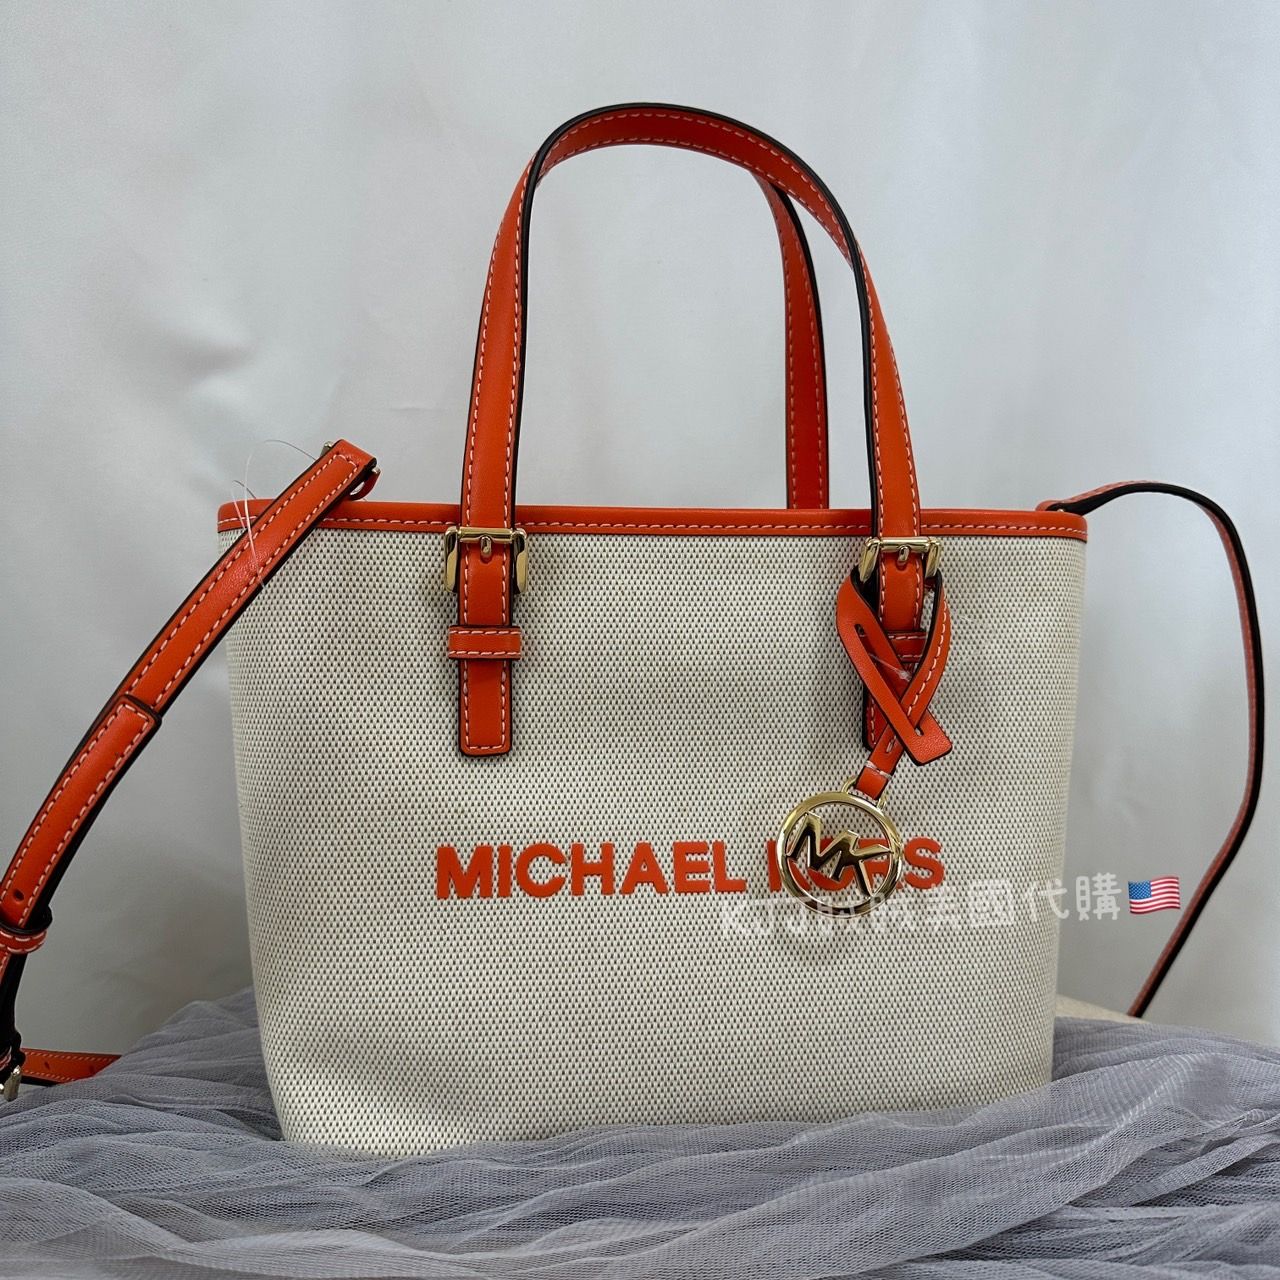 【MICHAEL KORS】MK 斜背 小托特包 包包